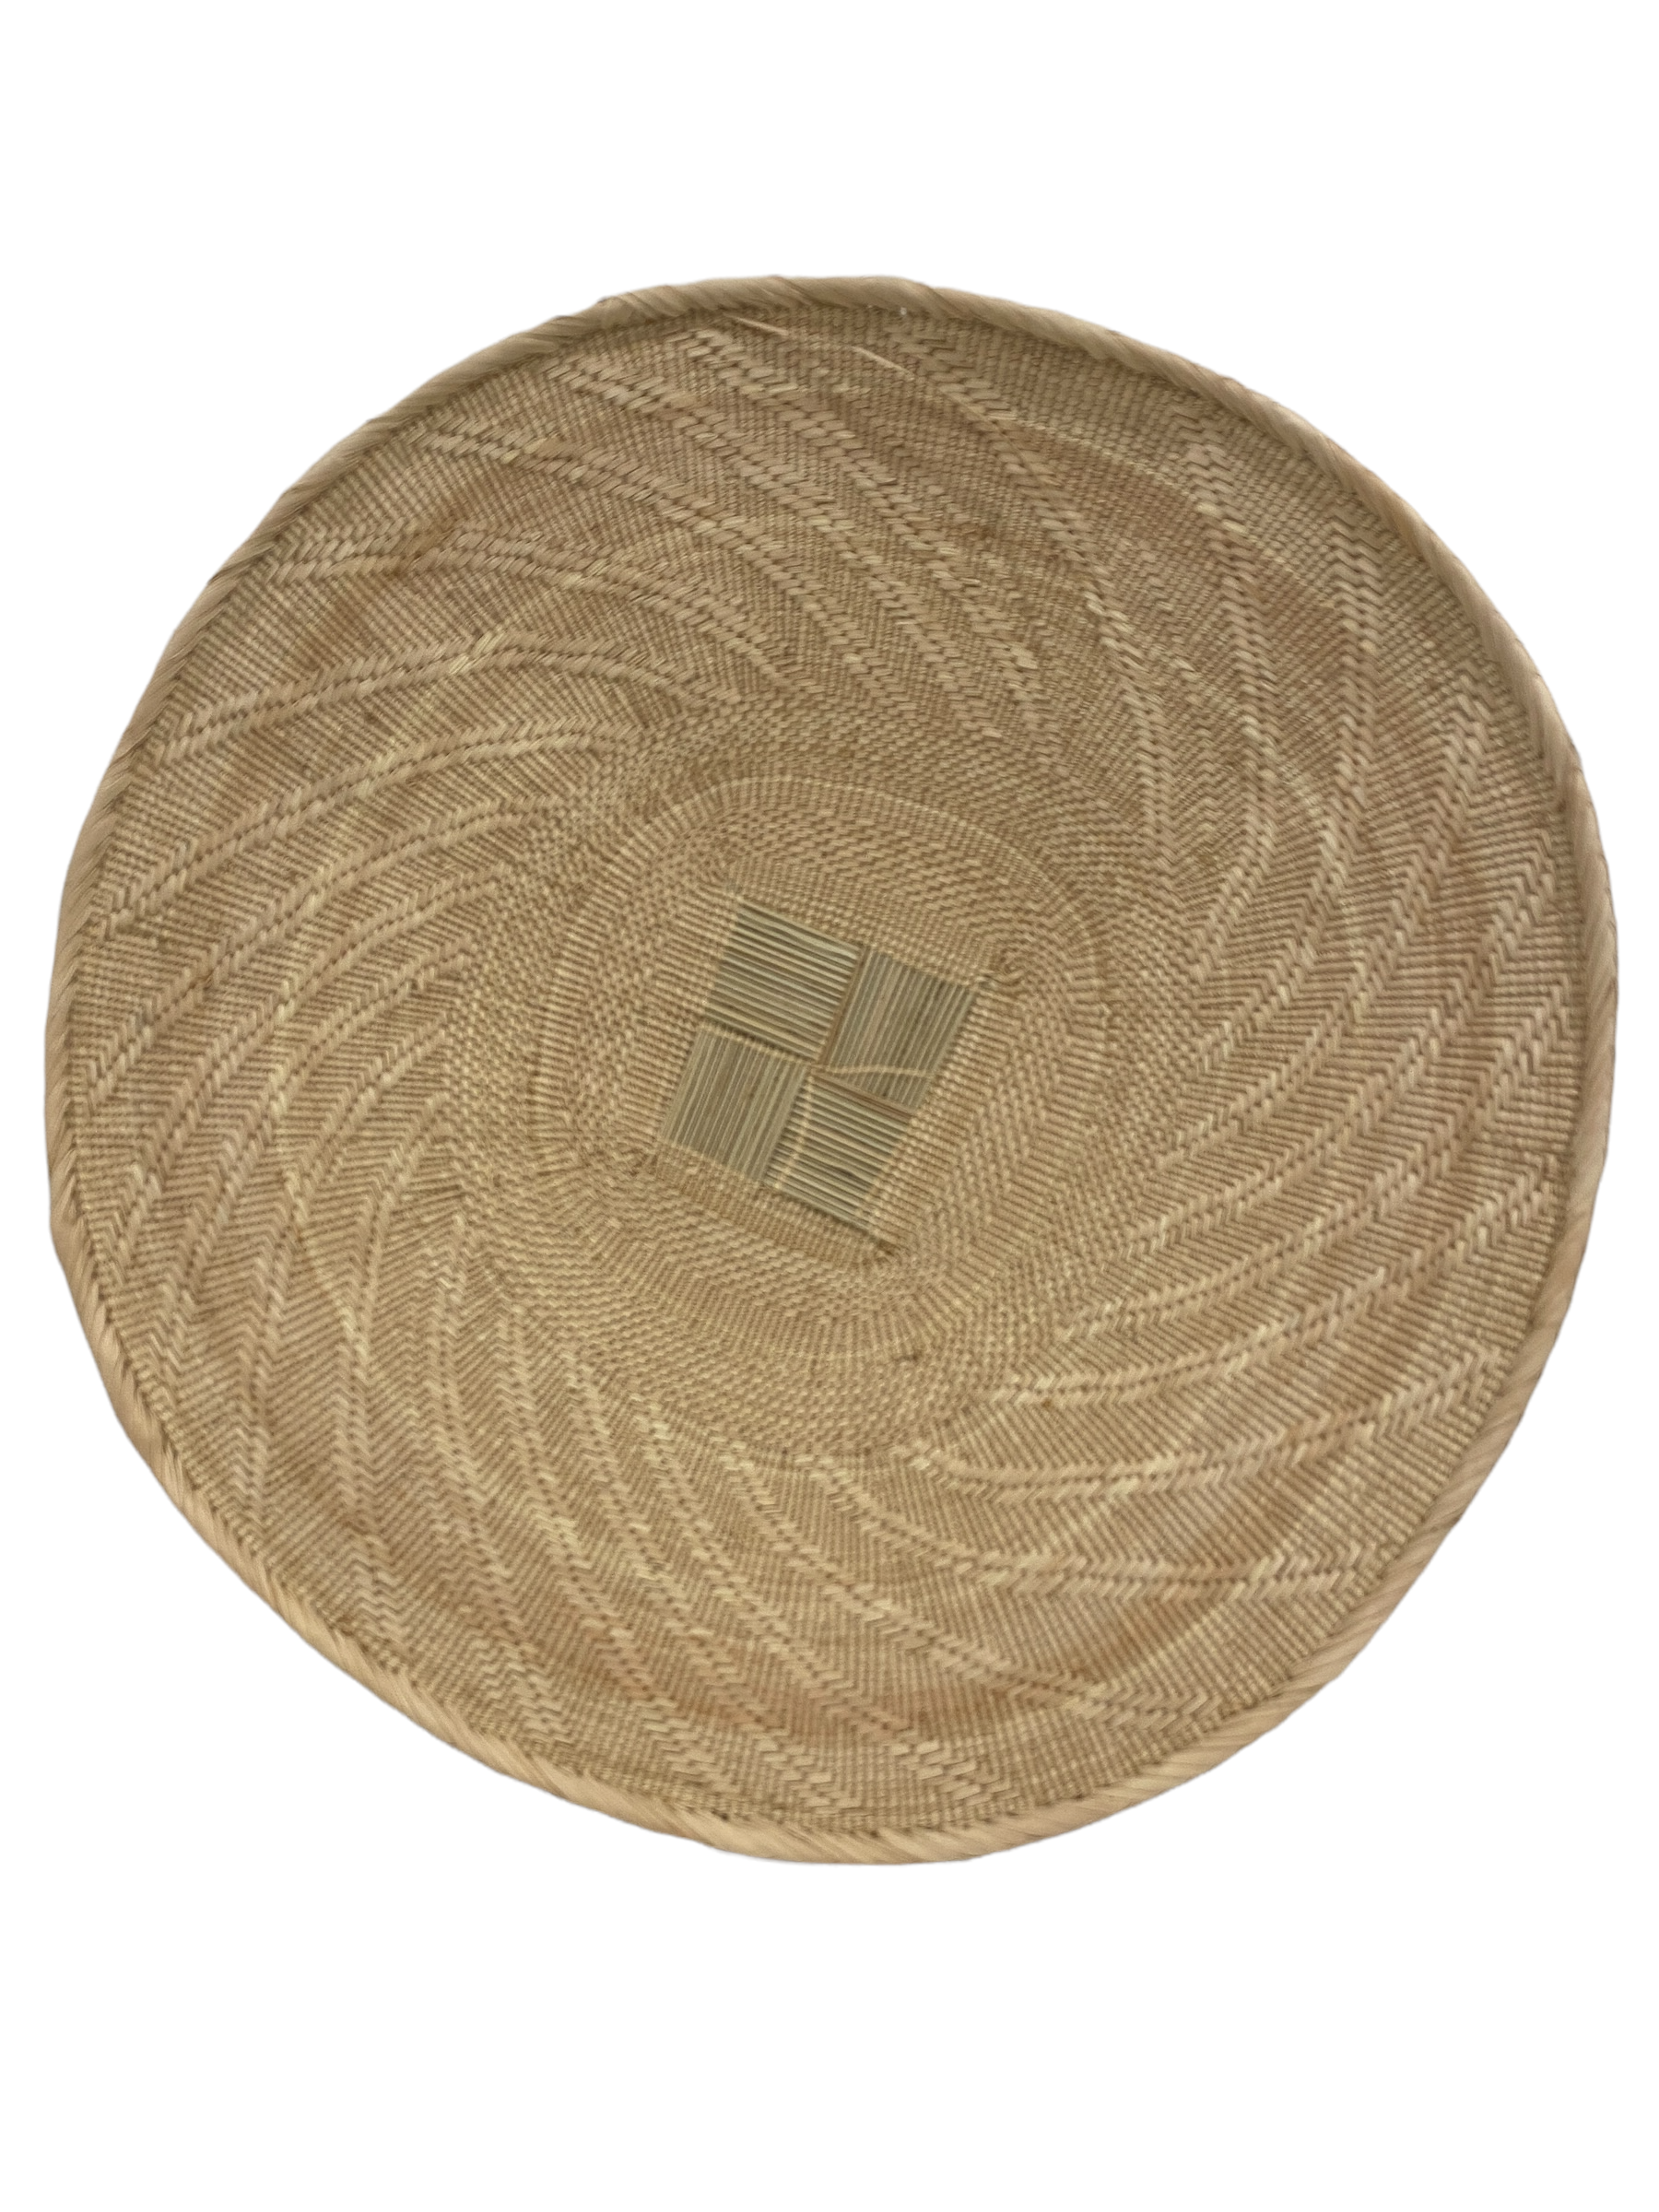 Tonga Basket Natural 55cm